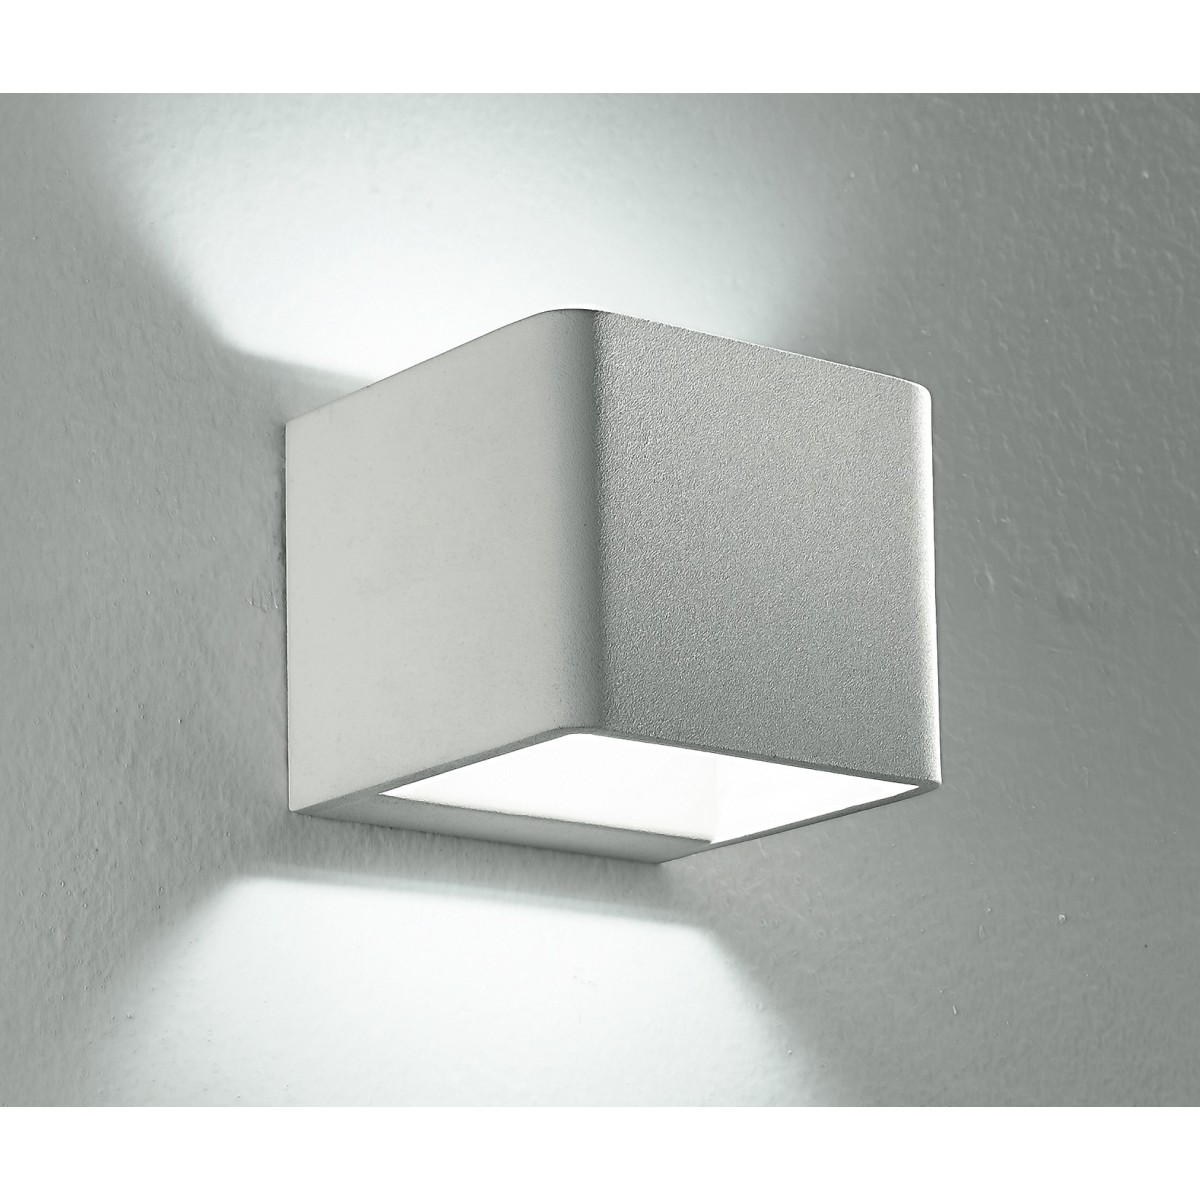 Applique bianca dalla forma cubica con luce led 6 watt 3500 kelvin